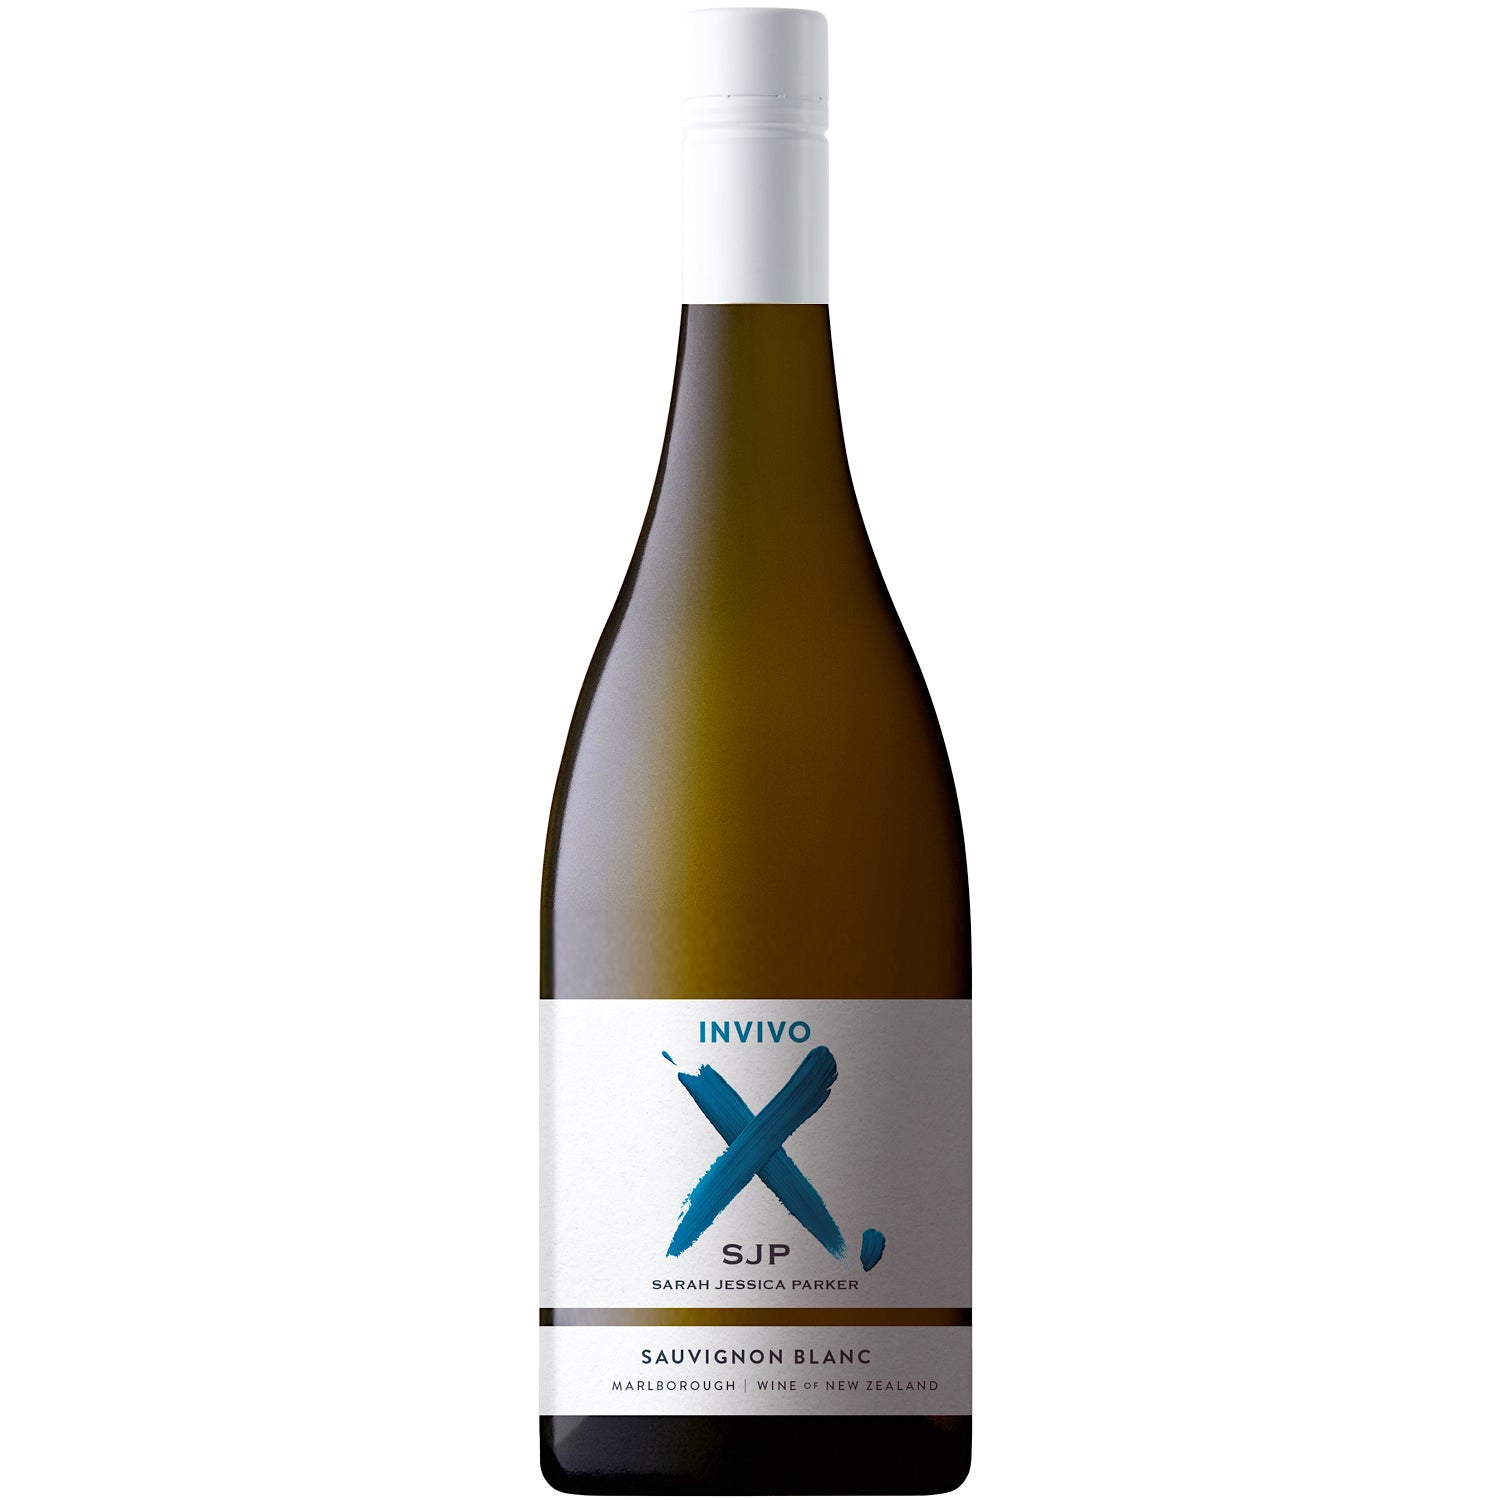 INVIVO X, SJP Sauvignon Blanc [750ml]